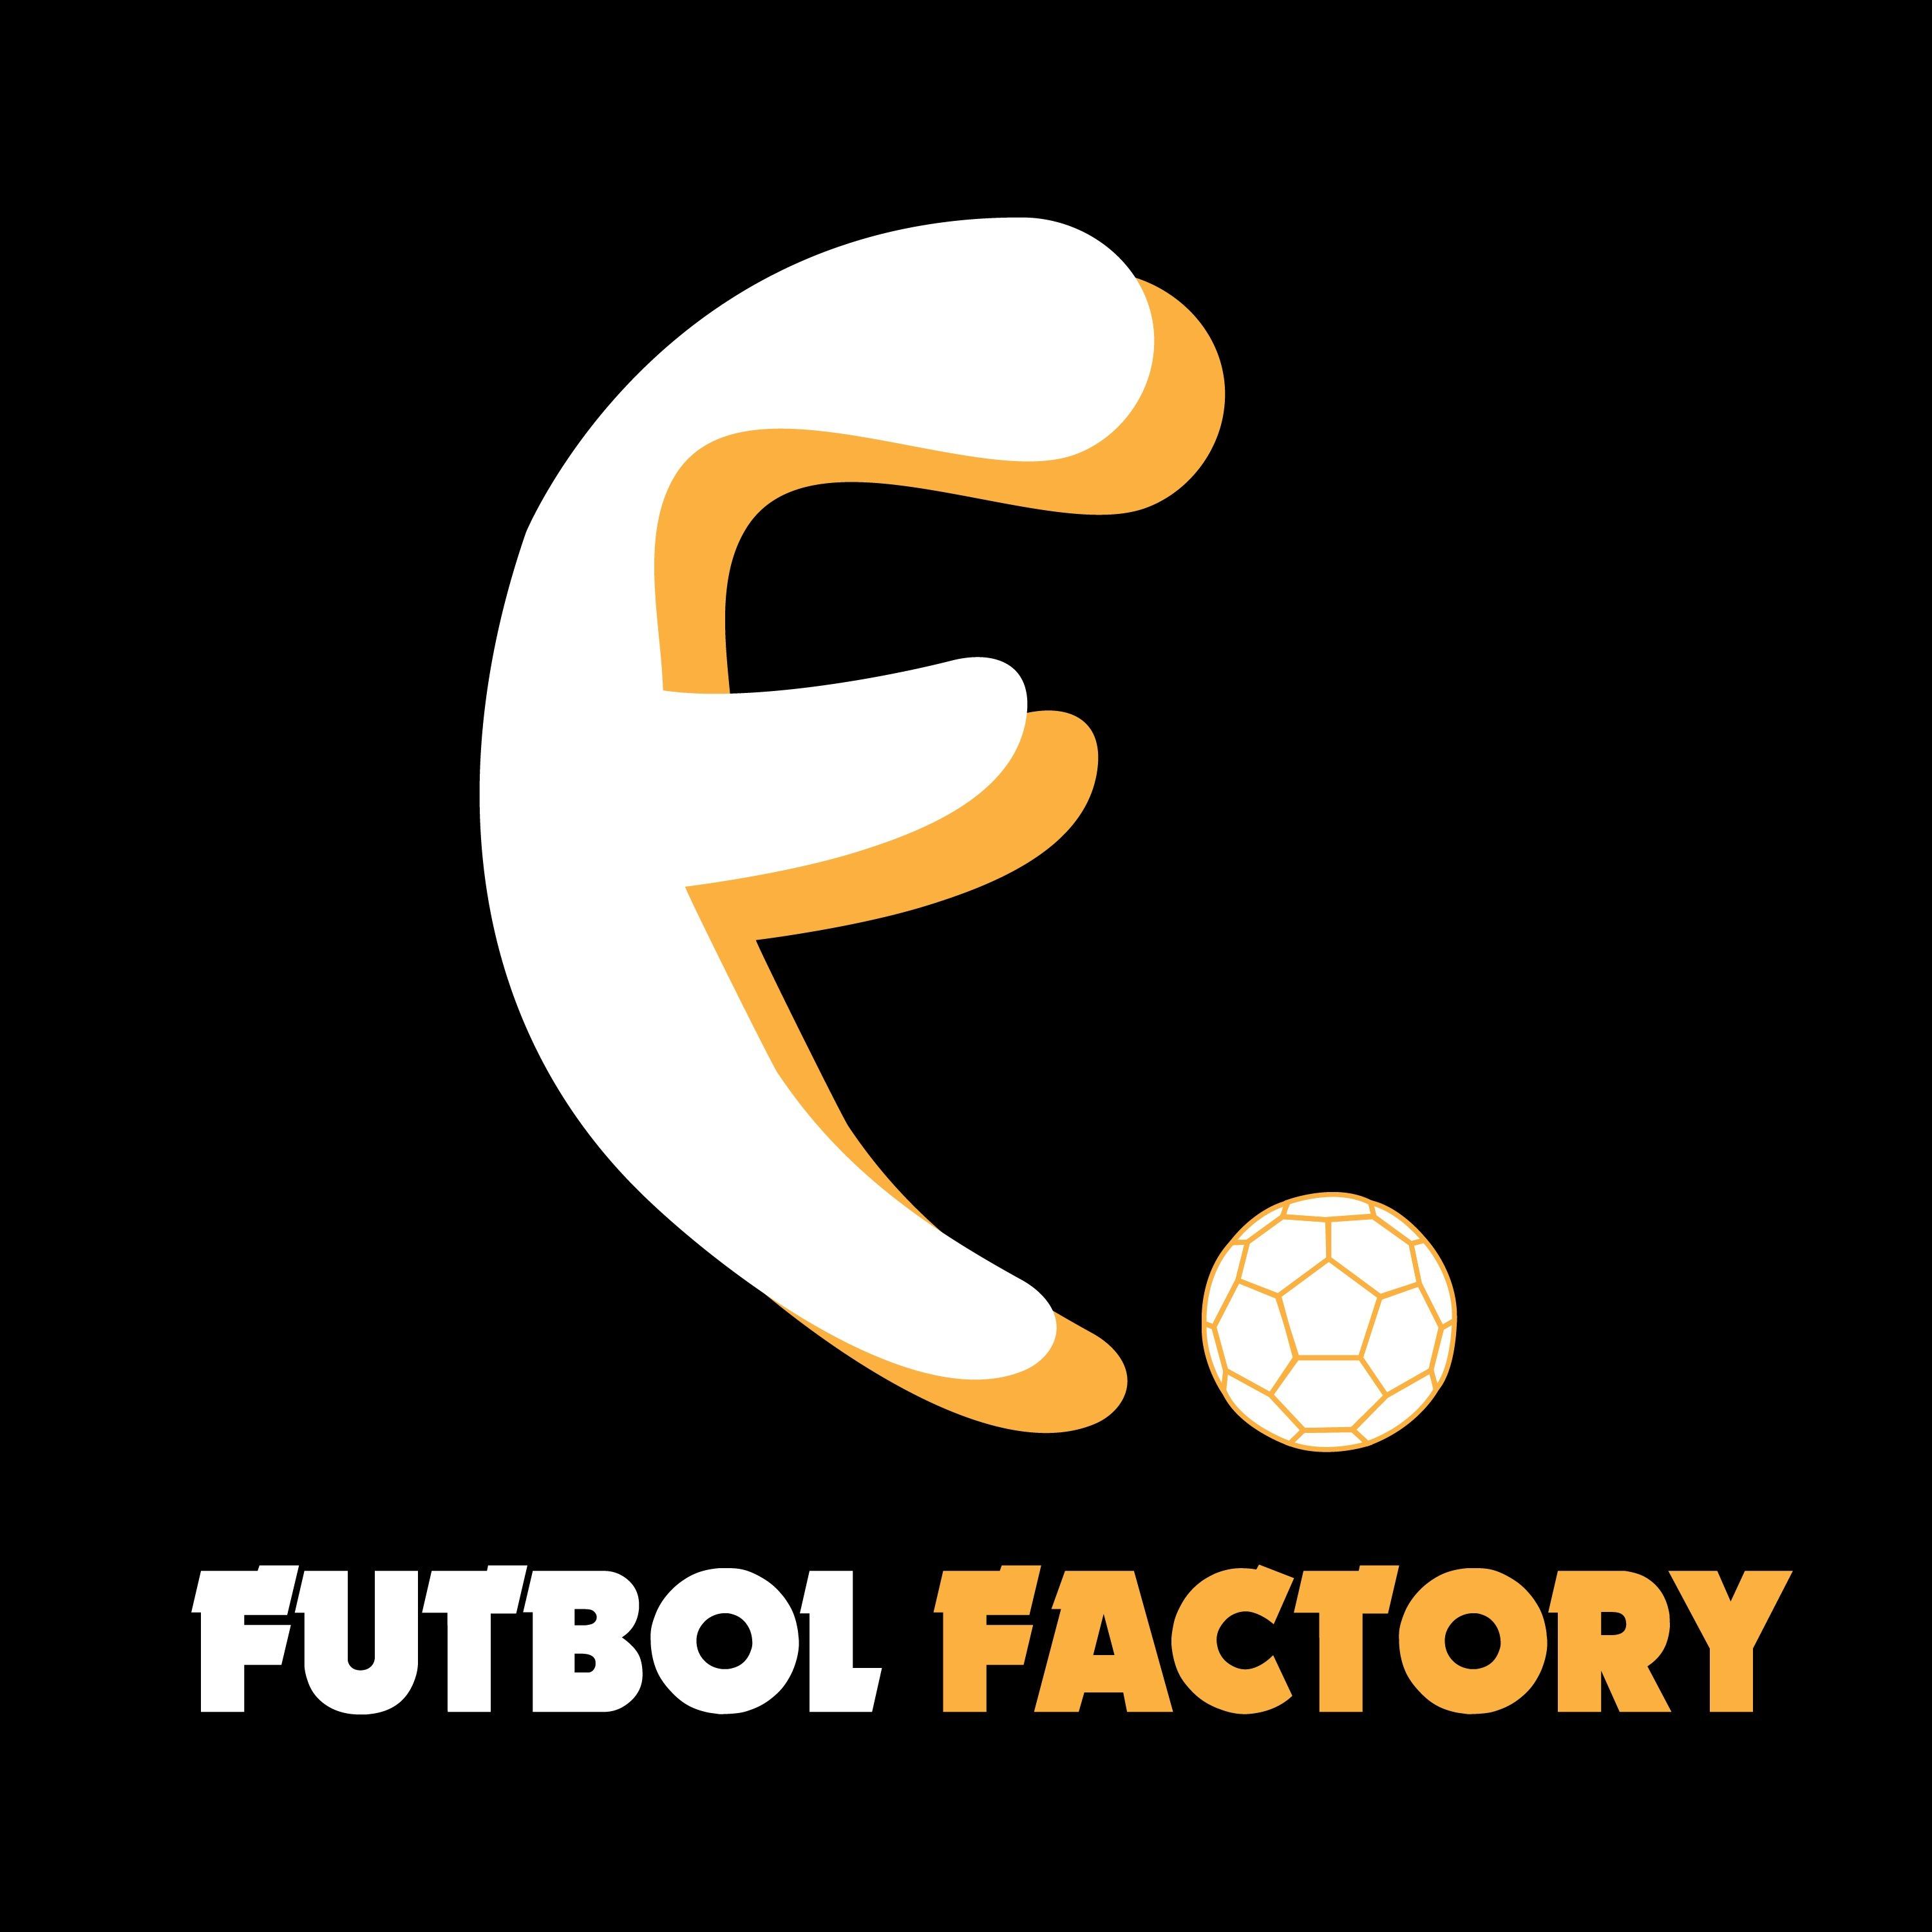 The Futbol Factory Podcast